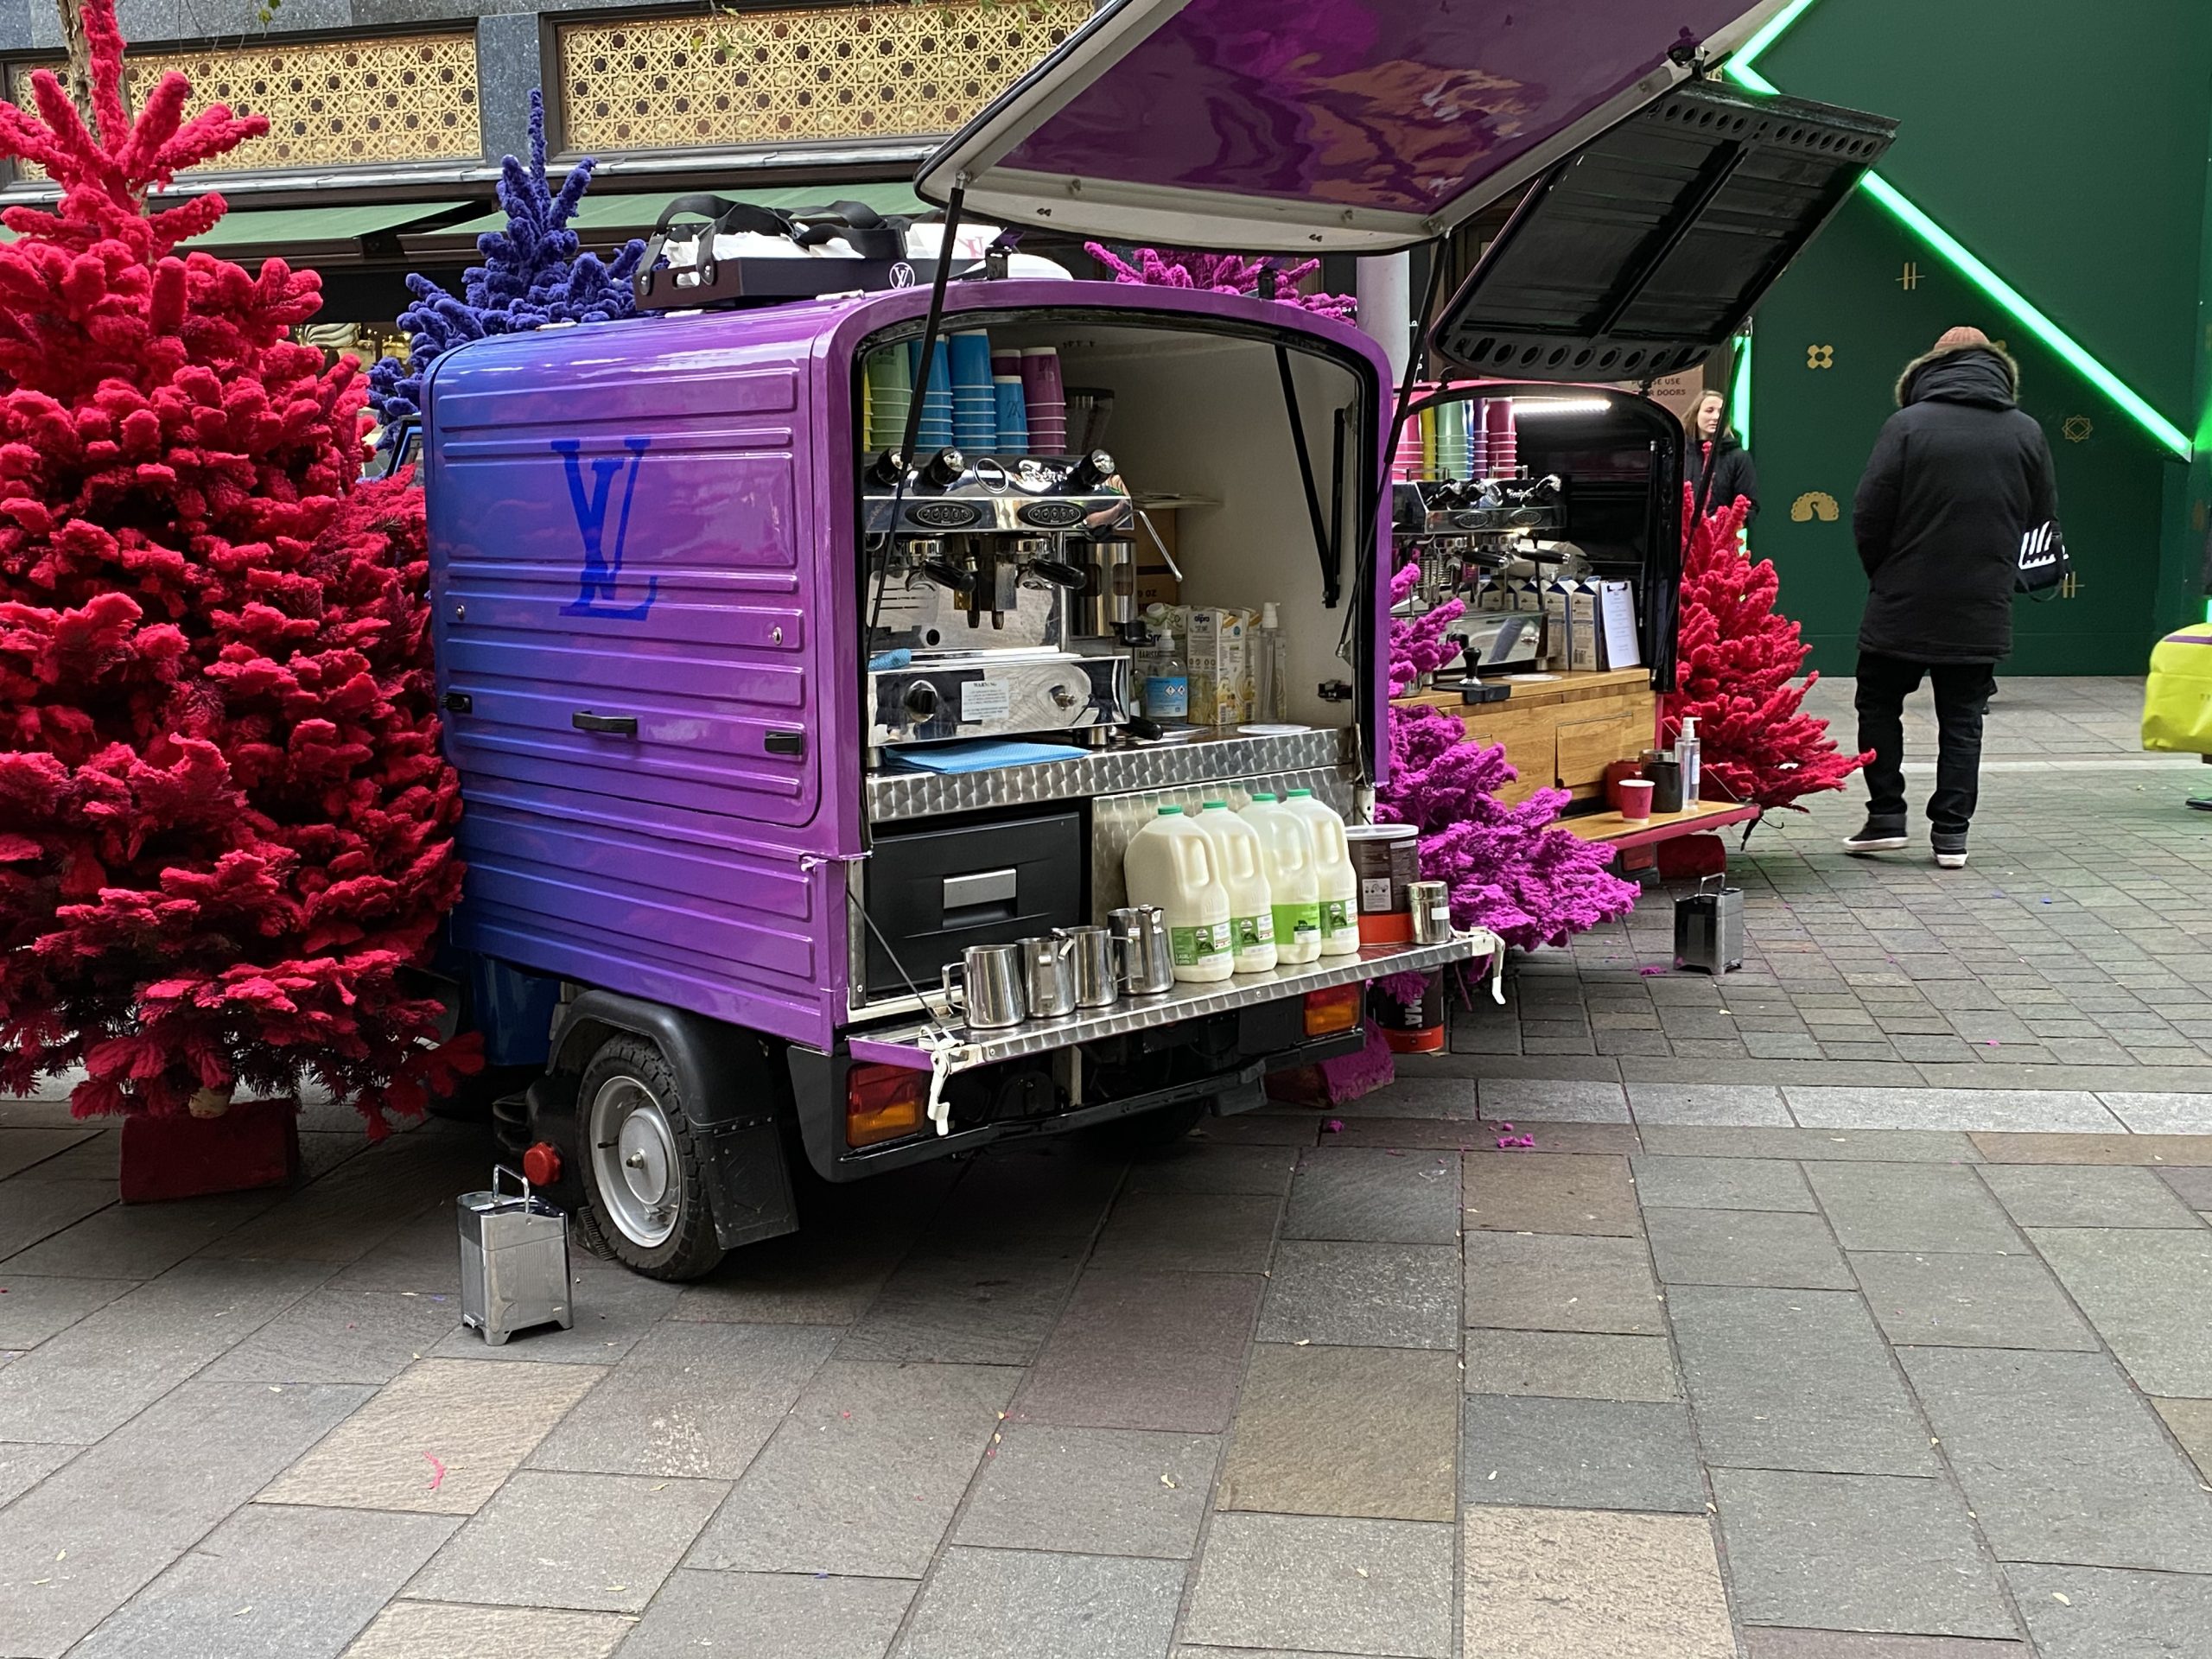 The Mobile Coffee Bean Louis Vuitton branded coffee van outside Harrods Knightsbridge London